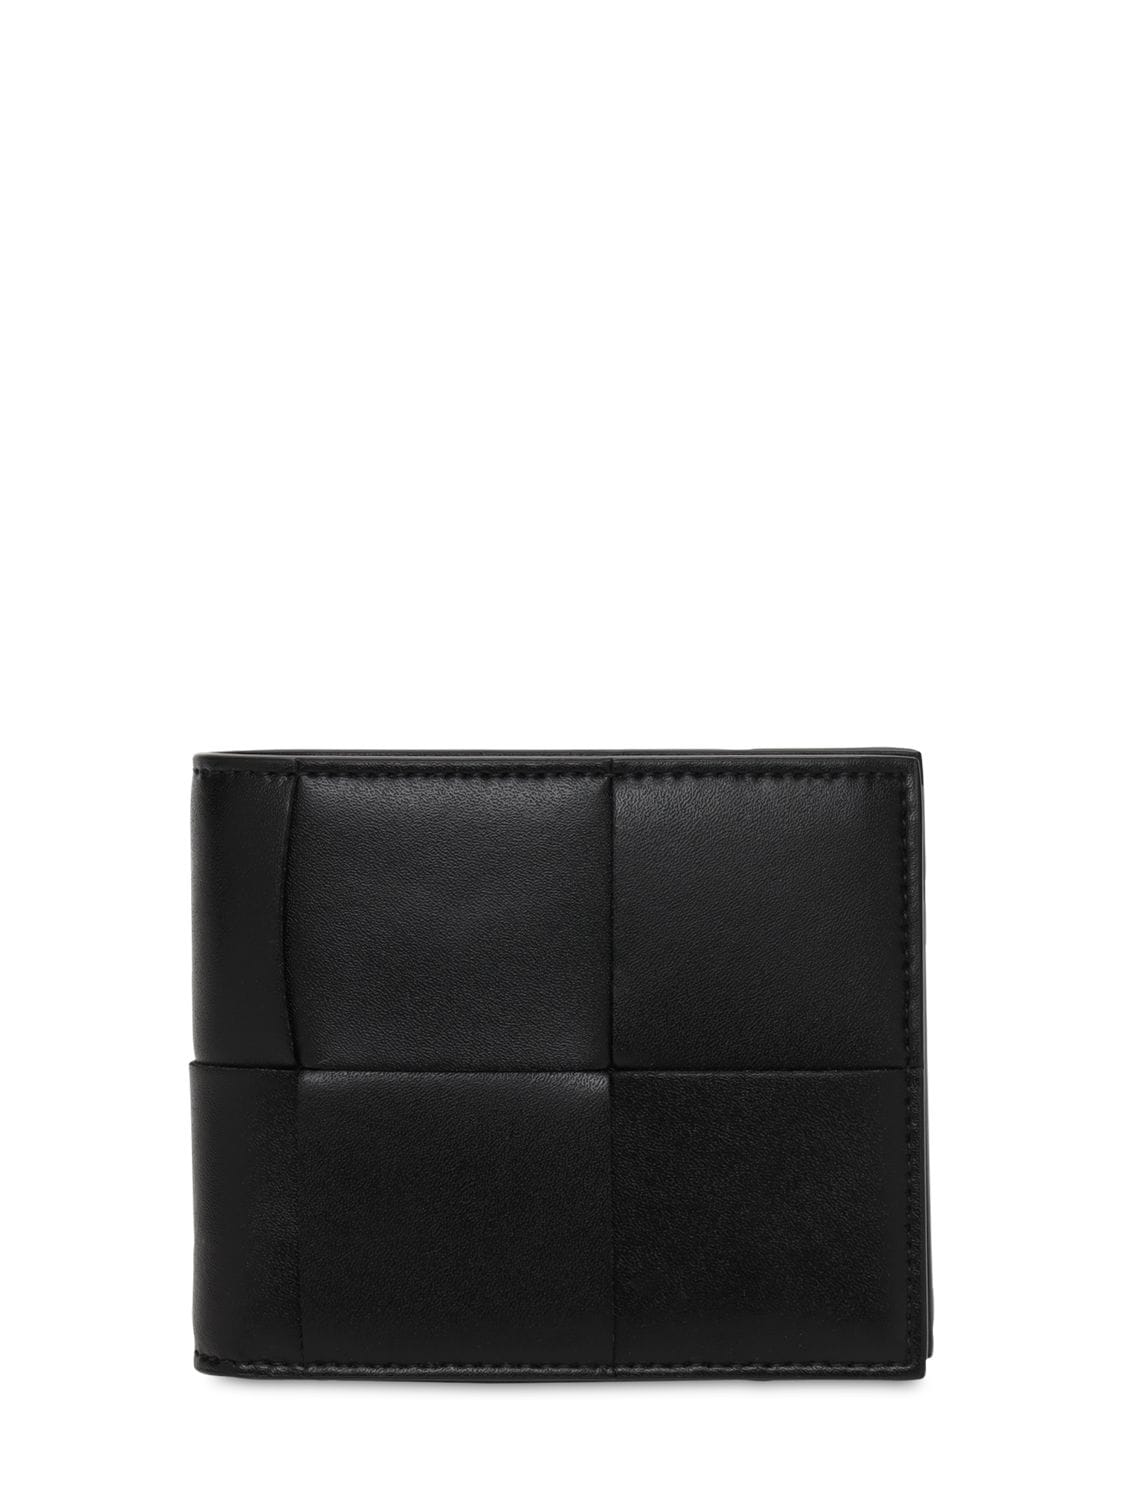 Image of Maxi Intreccio Leather Billfold Wallet